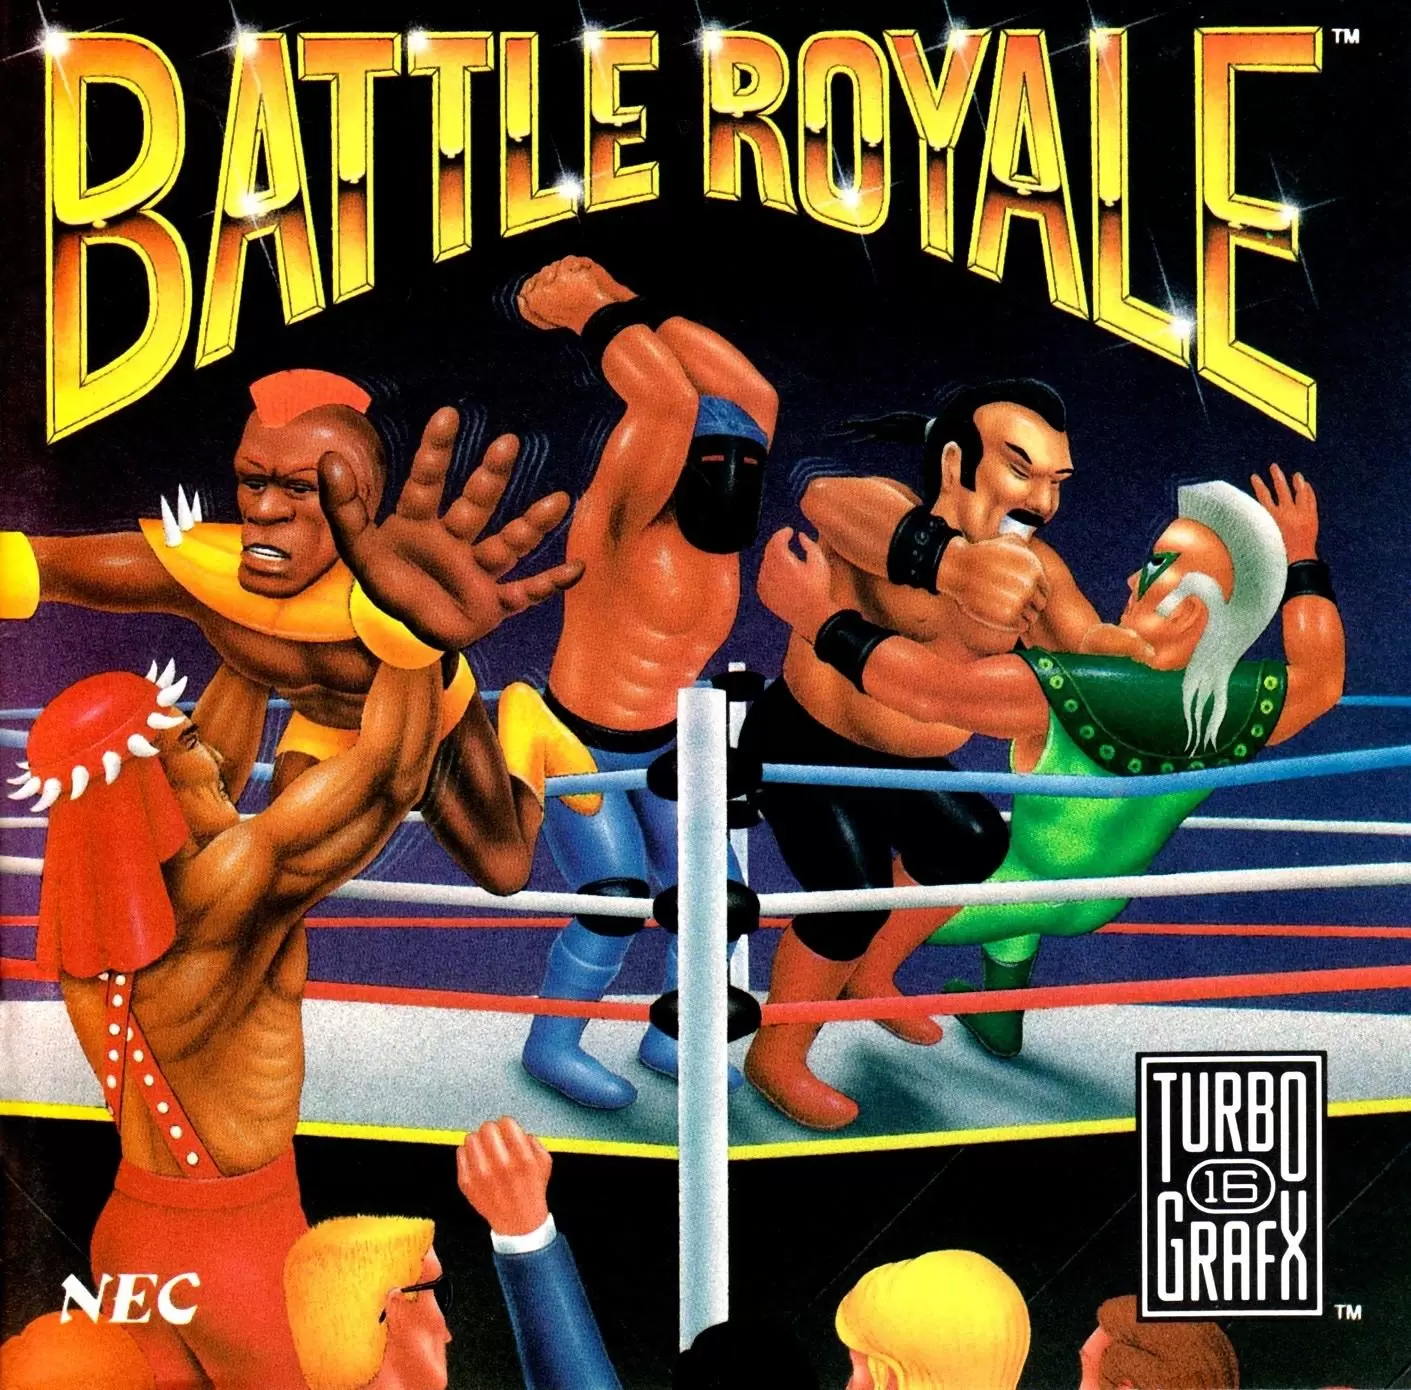 Turbo Grafx 16 (PC Engine) - Battle Royale